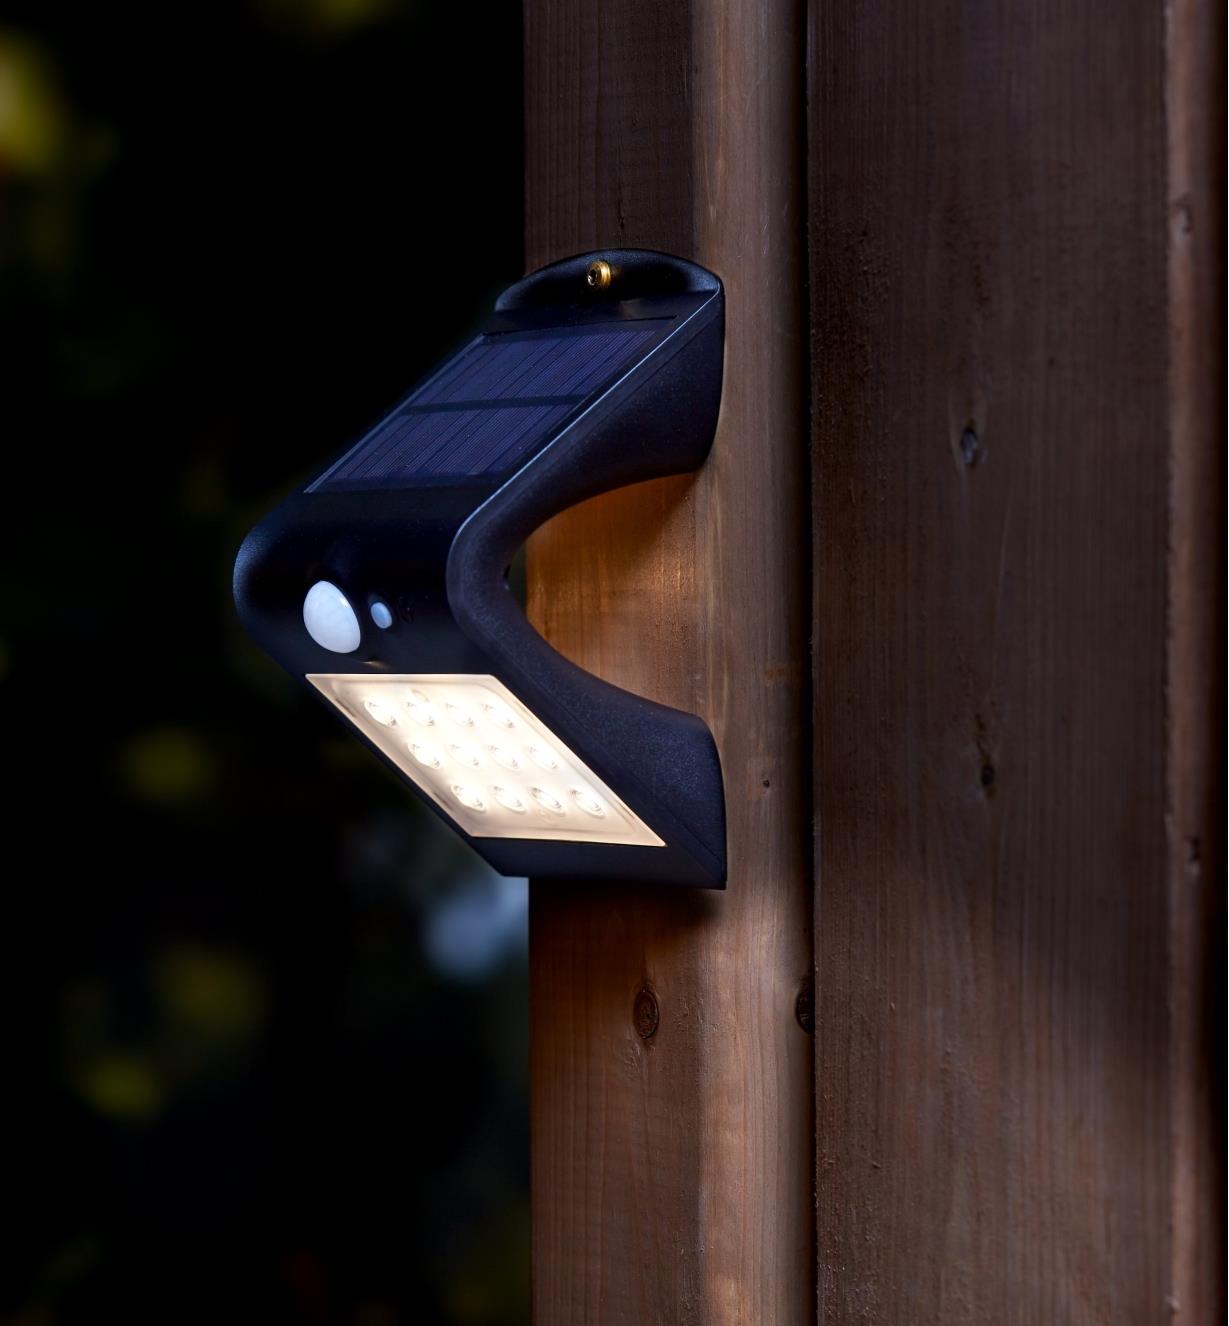 Motion-Sensing Solar LED Light mounted on a fence